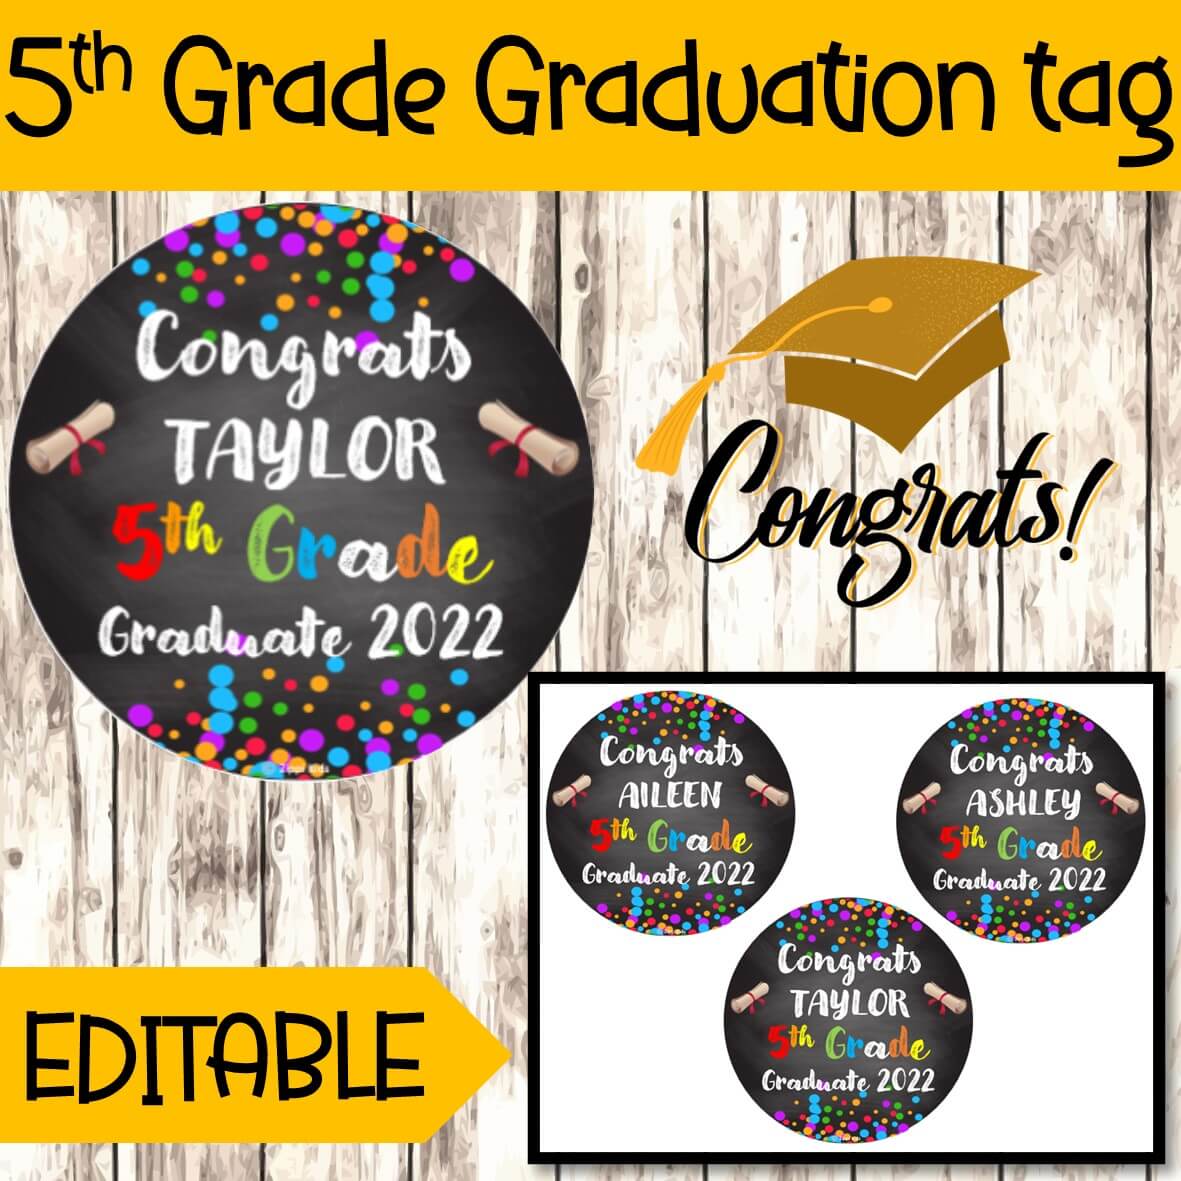 EDITABLE 5th Grade Graduation Gift Tags, Congrats 5th Grade Graduate tags